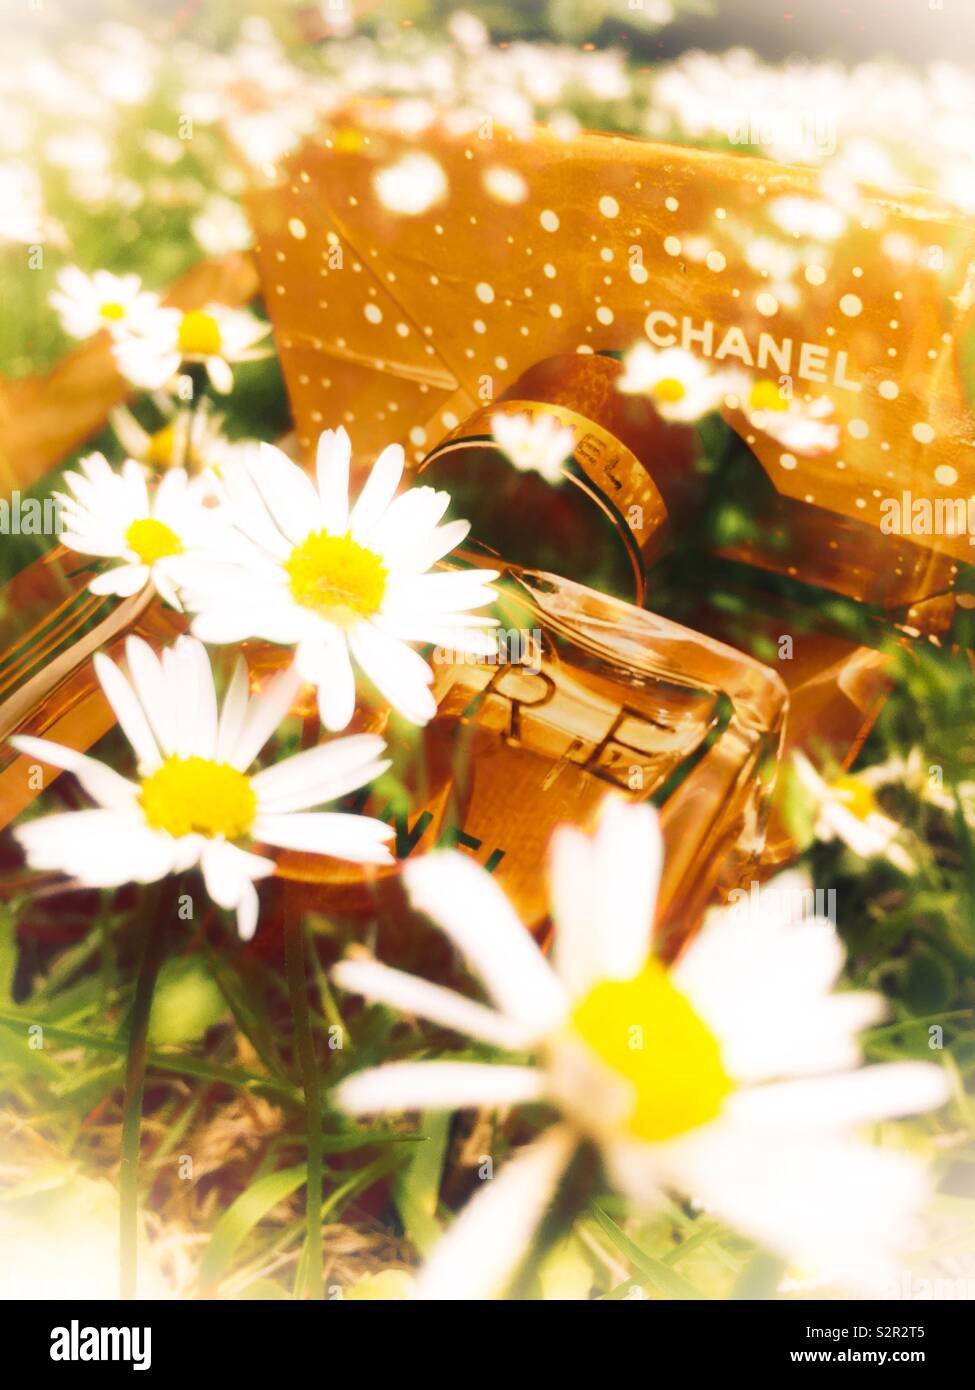 Chanel allure perfume with Daisy’s around double exposure Stock Photo